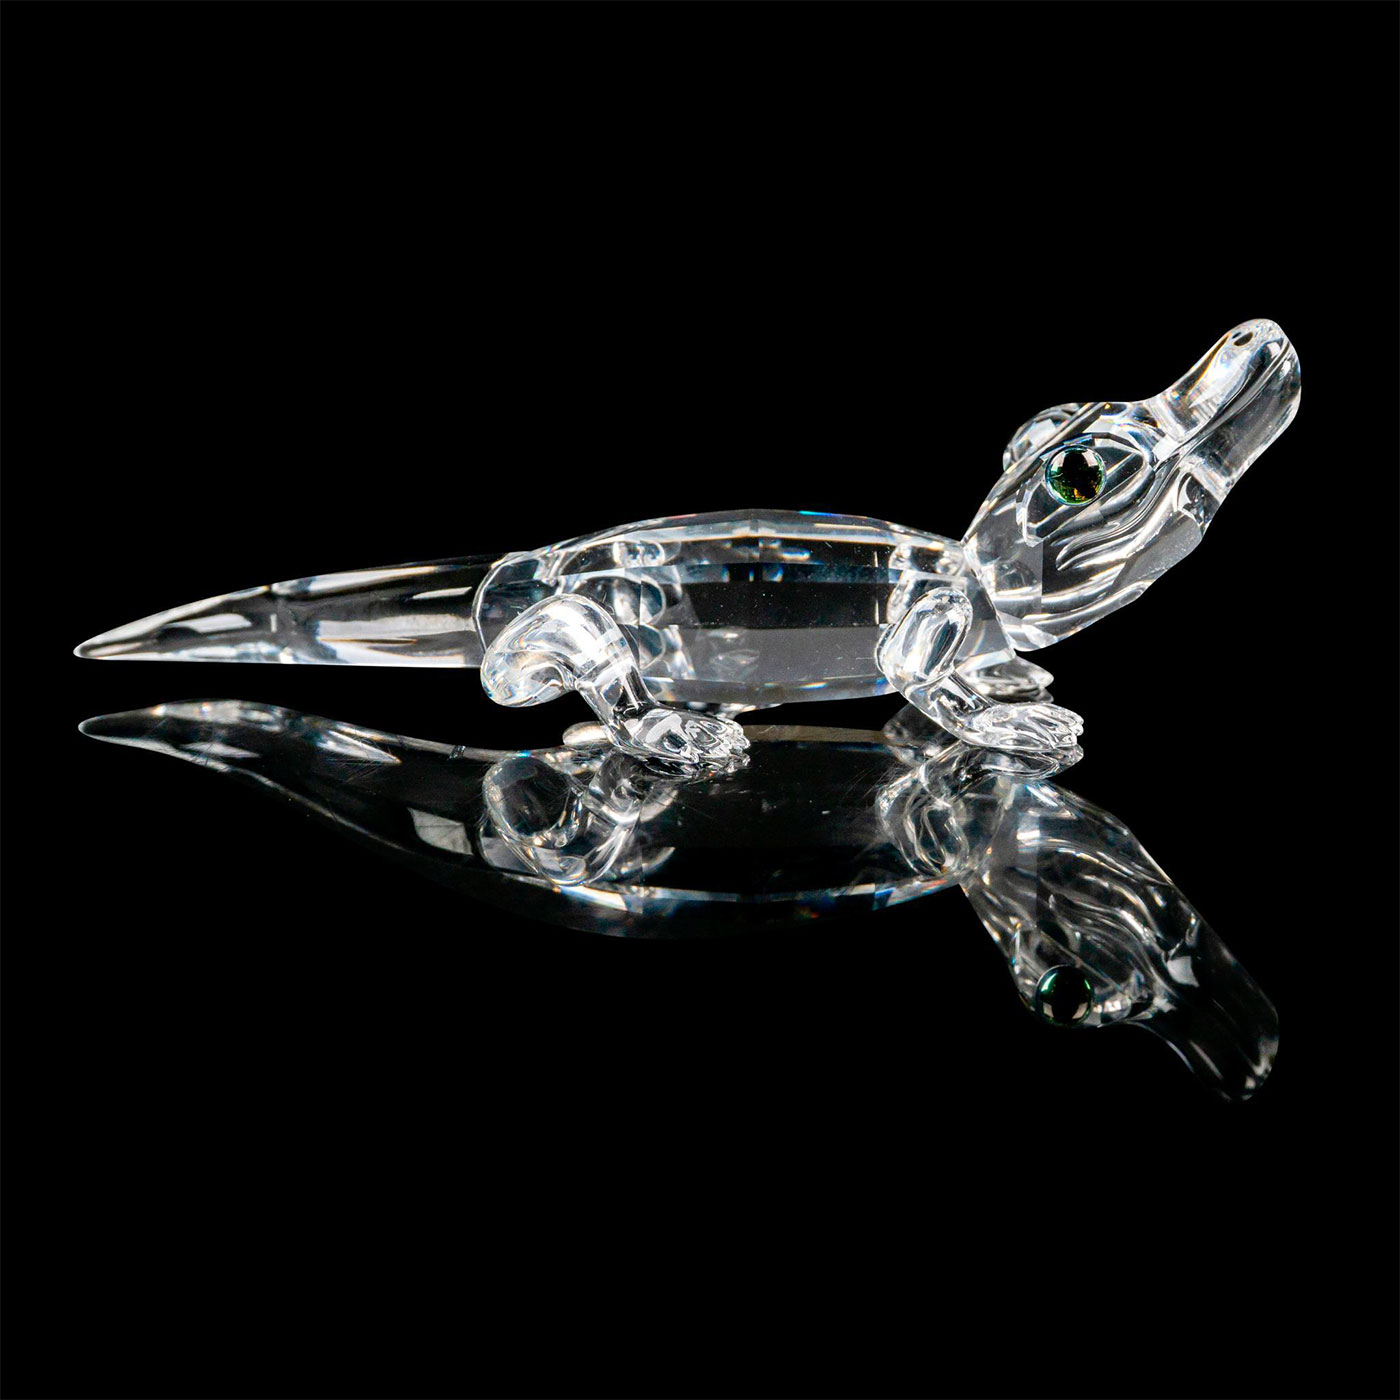 Swarovski Crystal Figure, Clear Alligator - Image 2 of 4